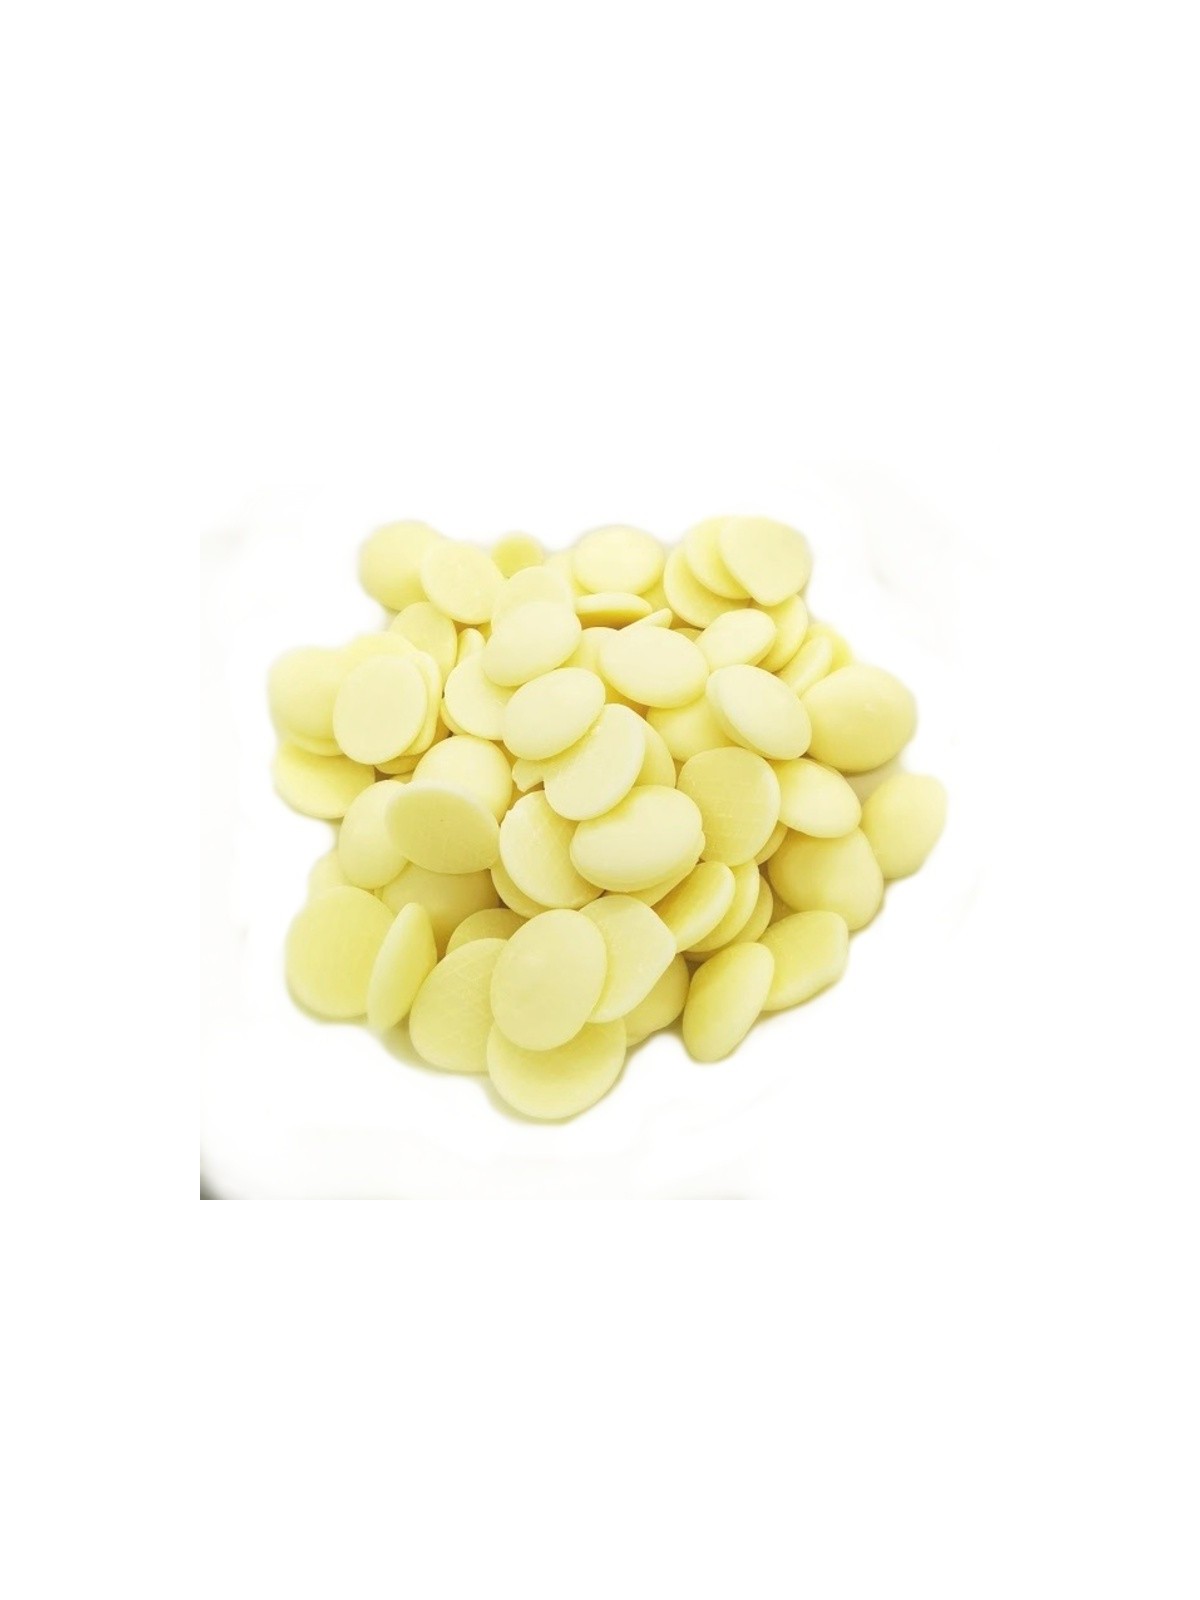 White chocolate 29% - white discs / chips- 500g